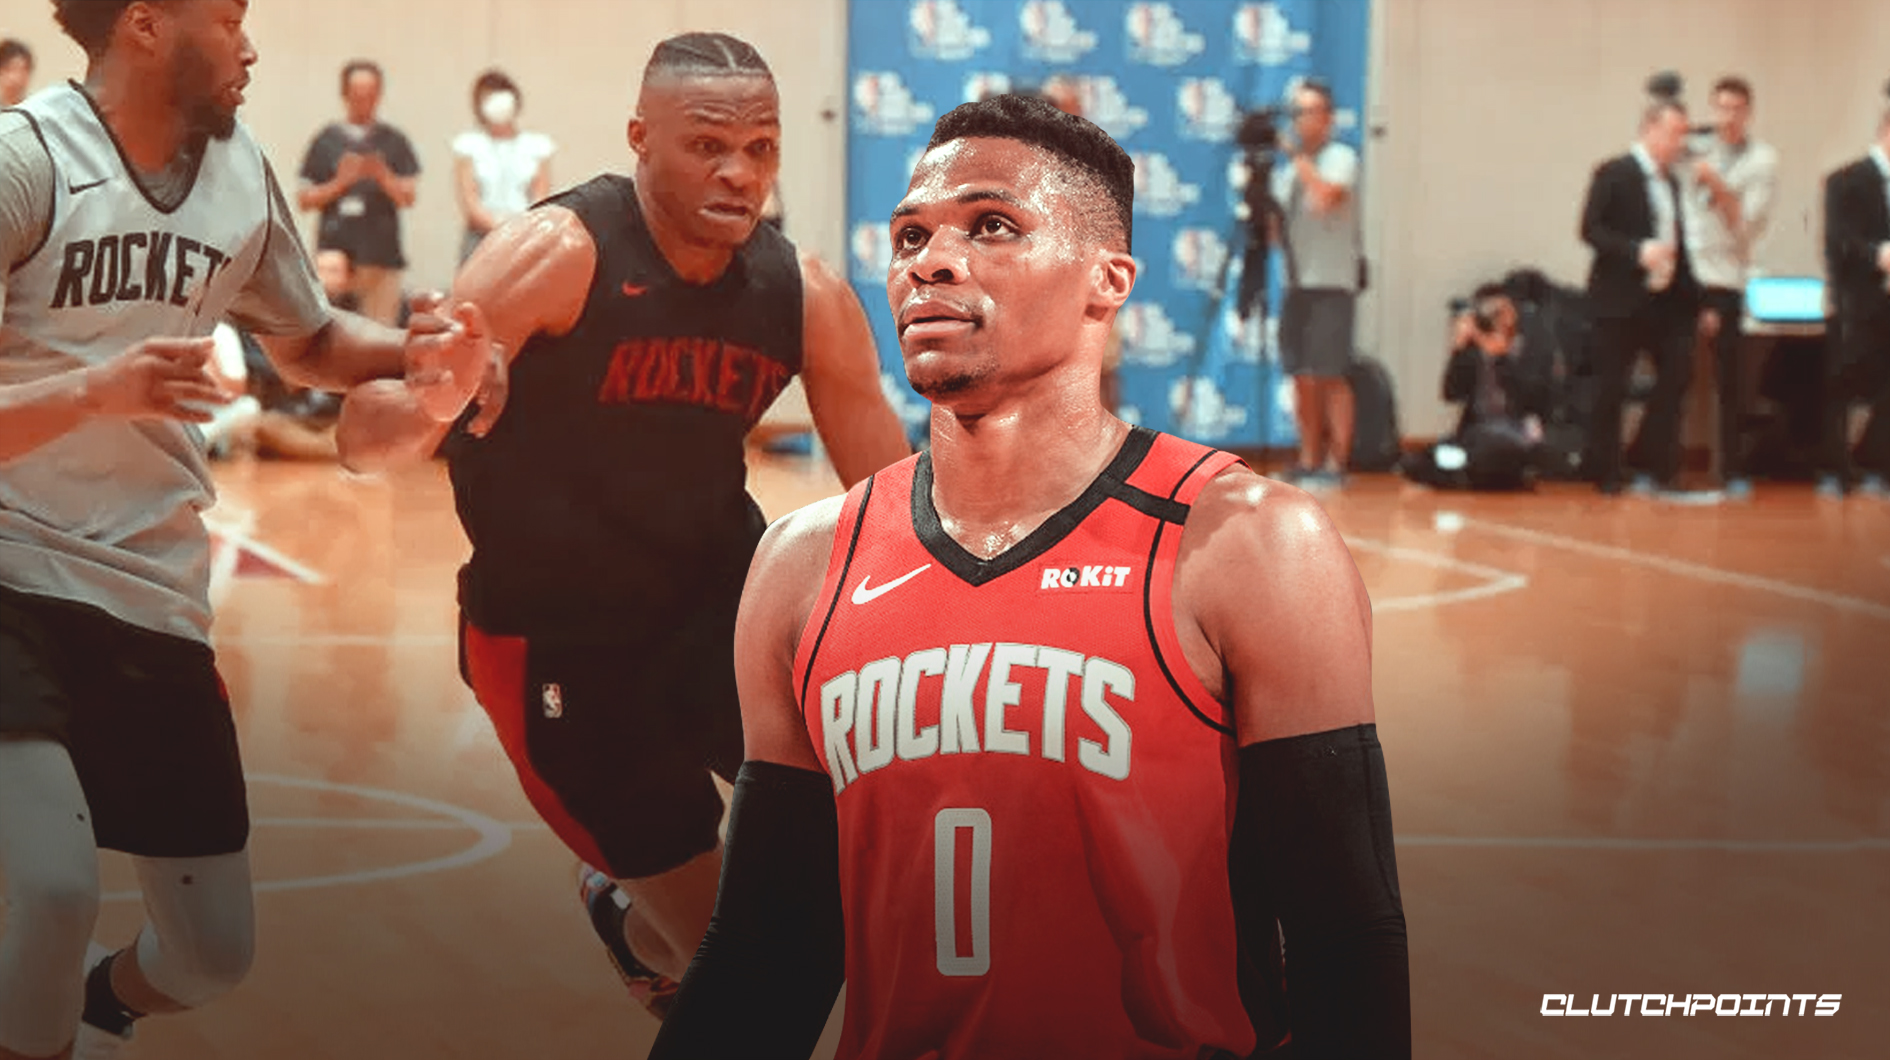 Russell-Westbrook-Rockets